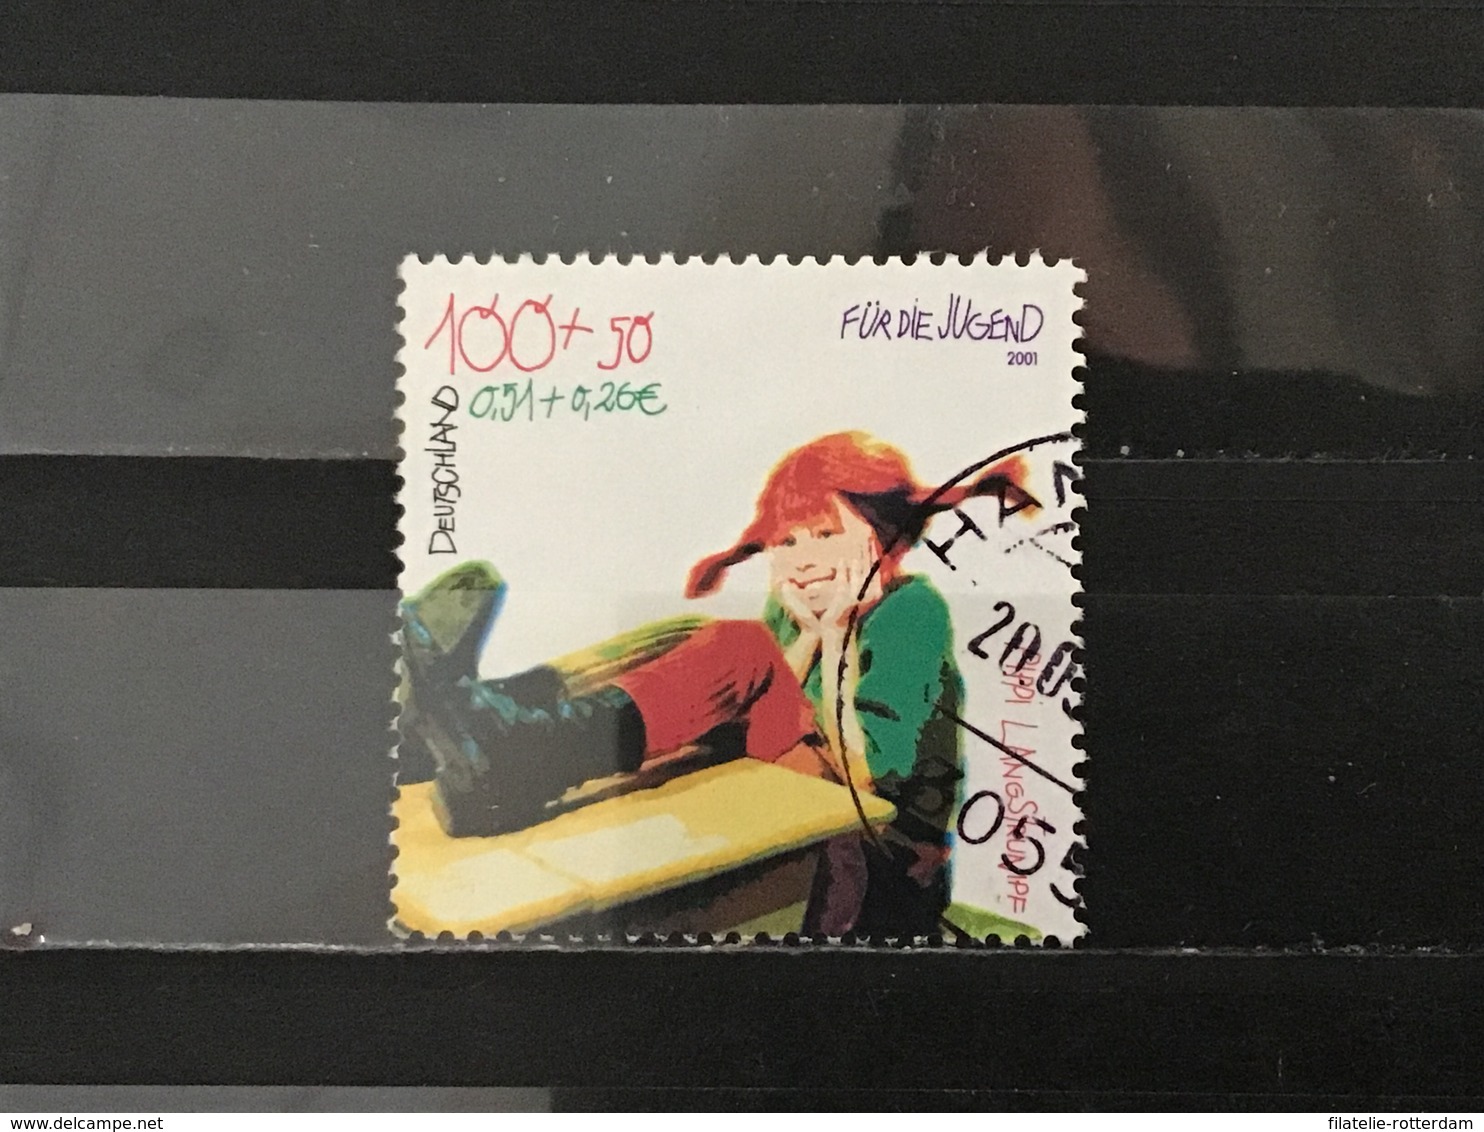 Duitsland / Germany - Jeugdboeken (100+50) 2001 - Used Stamps